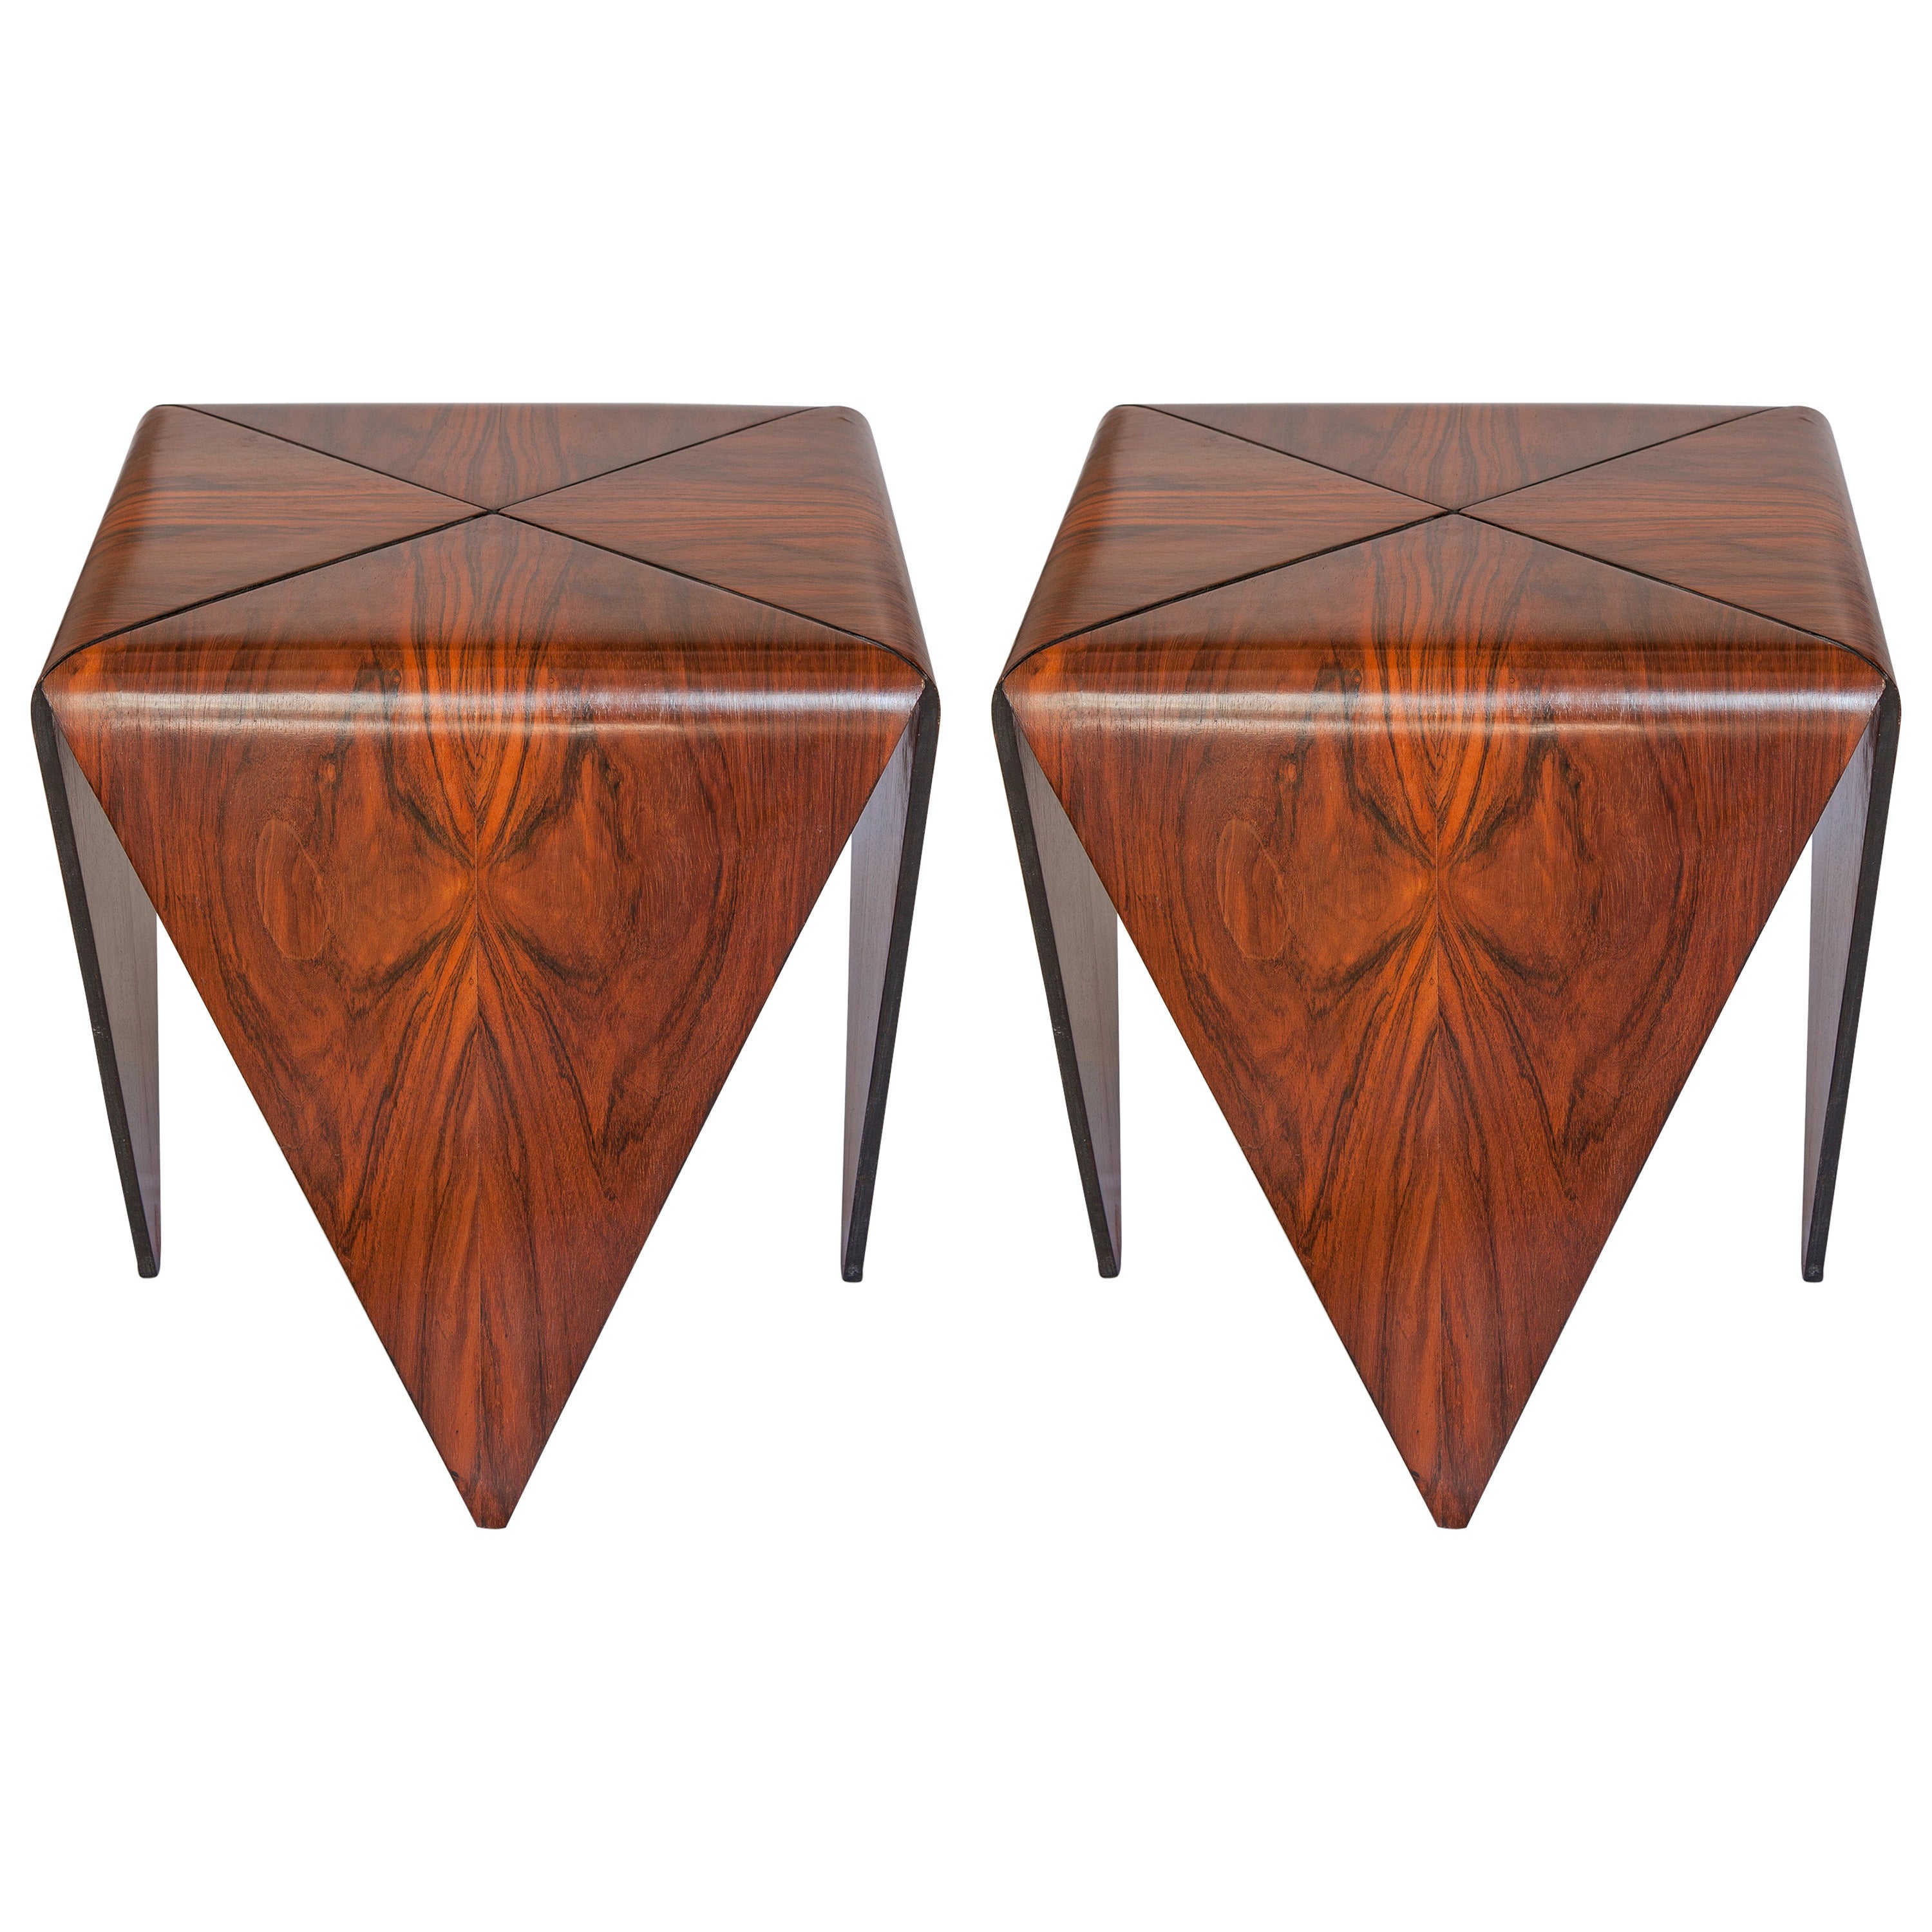 Original Pair of "Petala" Side Tables by Jorge Zalszupin For Sale